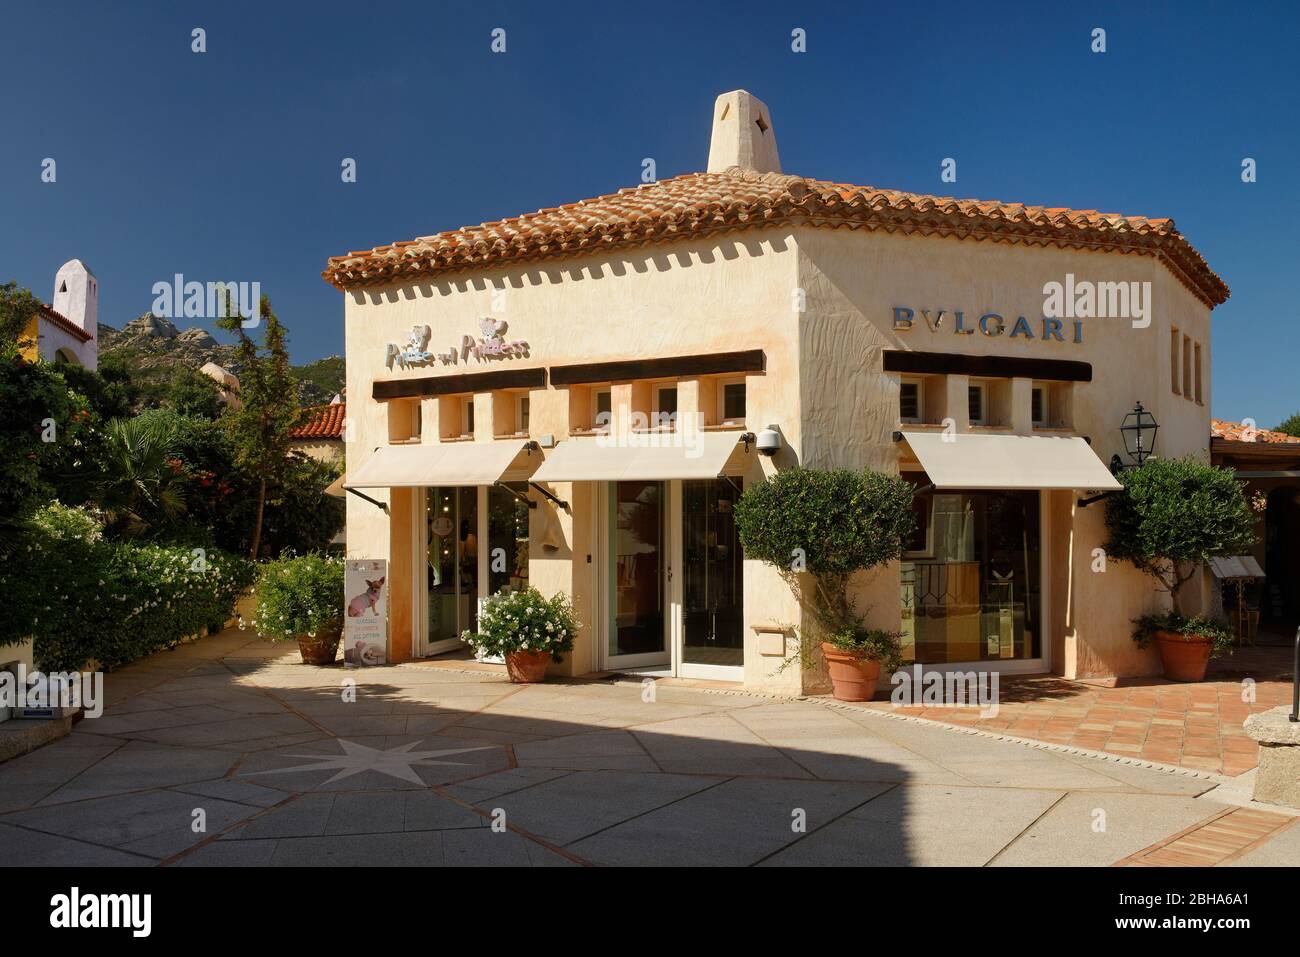 Neosarian style shops and residential buildings in Porto Cervo, Costa Smeralda, Mediterranean sea, Olbia-Tempio province, Sardinia, Italy Stock Photo